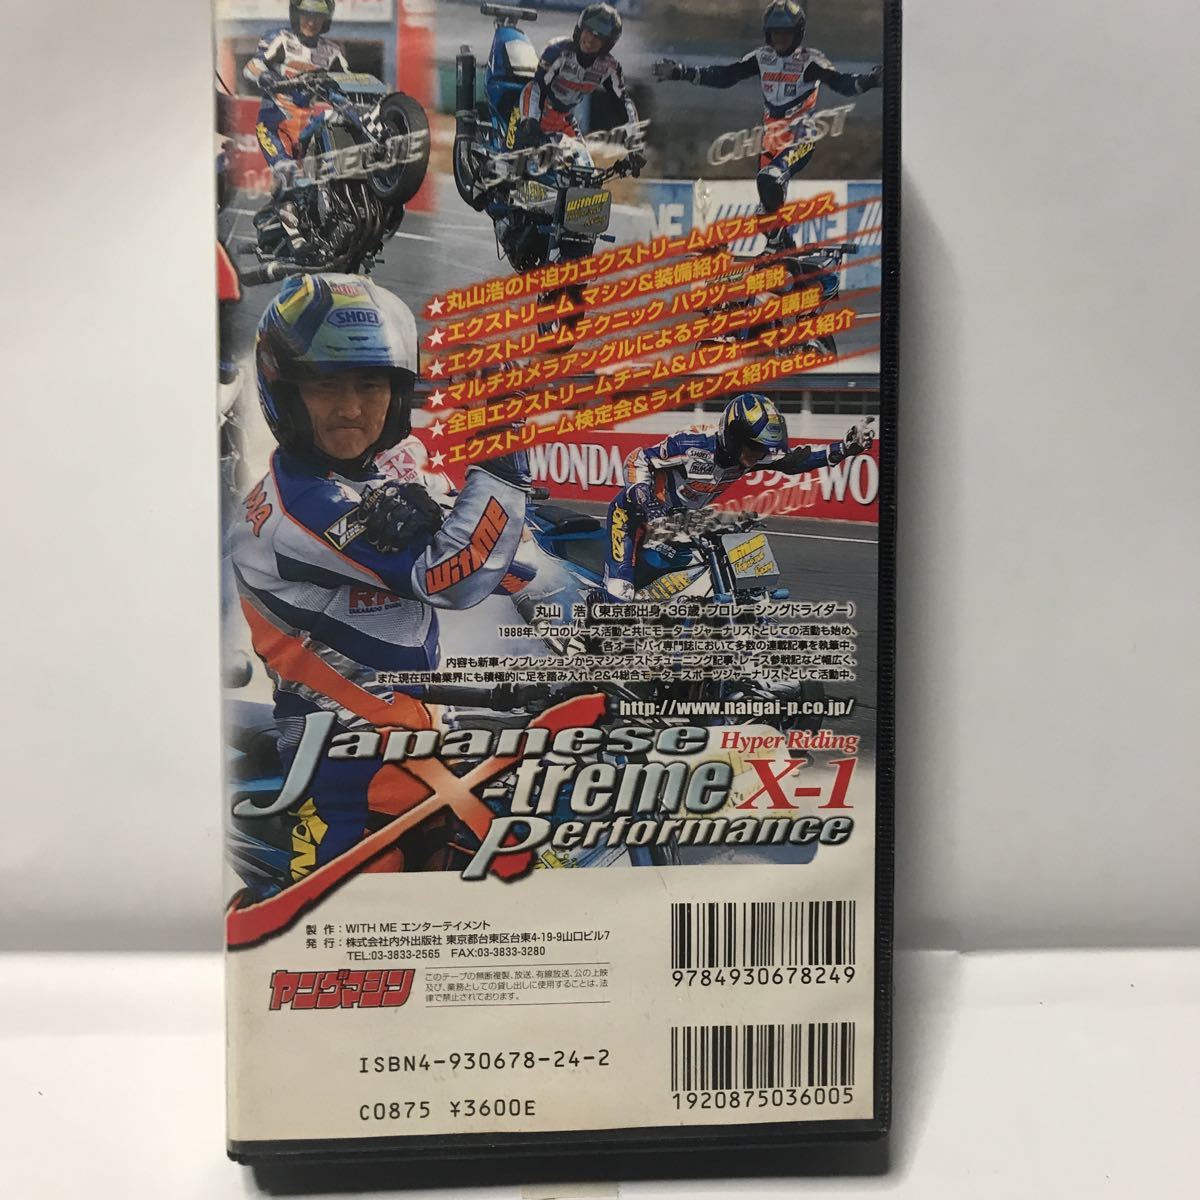  Maruyama .. мотоцикл * Extreme technique файл x-treme VHS видеолента воспроизведение не проверено 